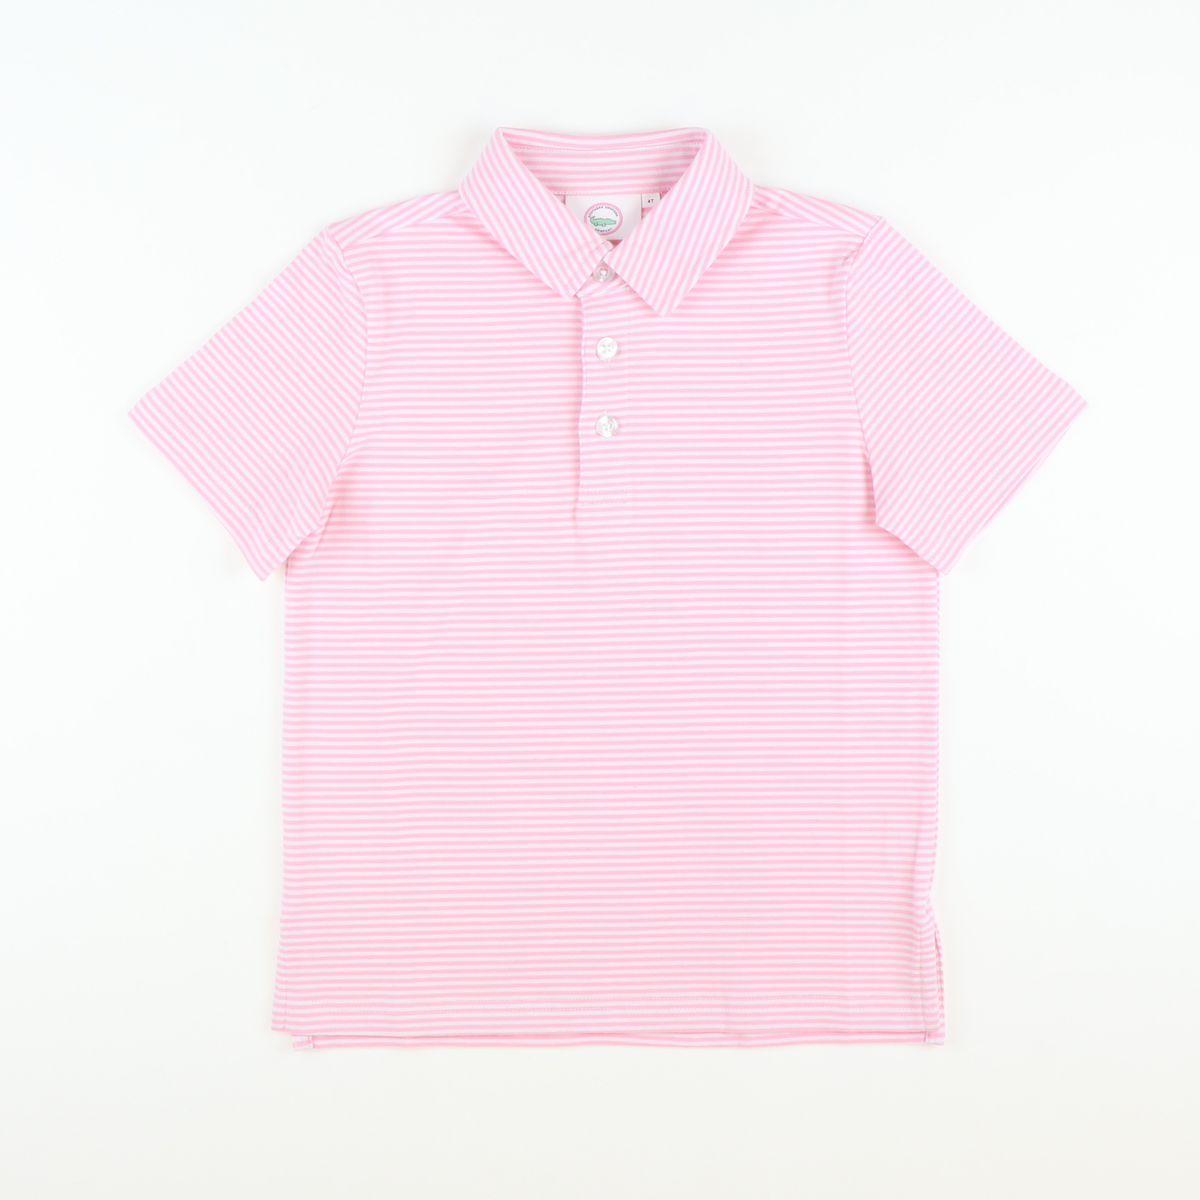 Boys Signature Knit Polo - Pink Thin Stripe